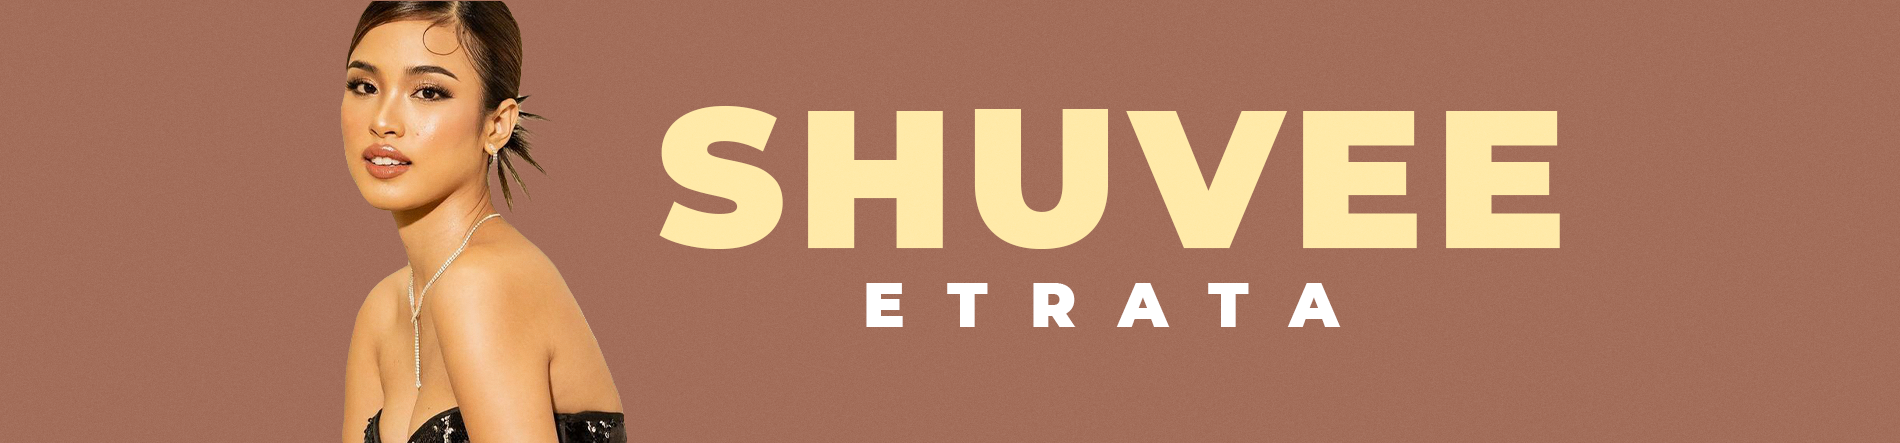 Shuvee Etrata Desktop Banner